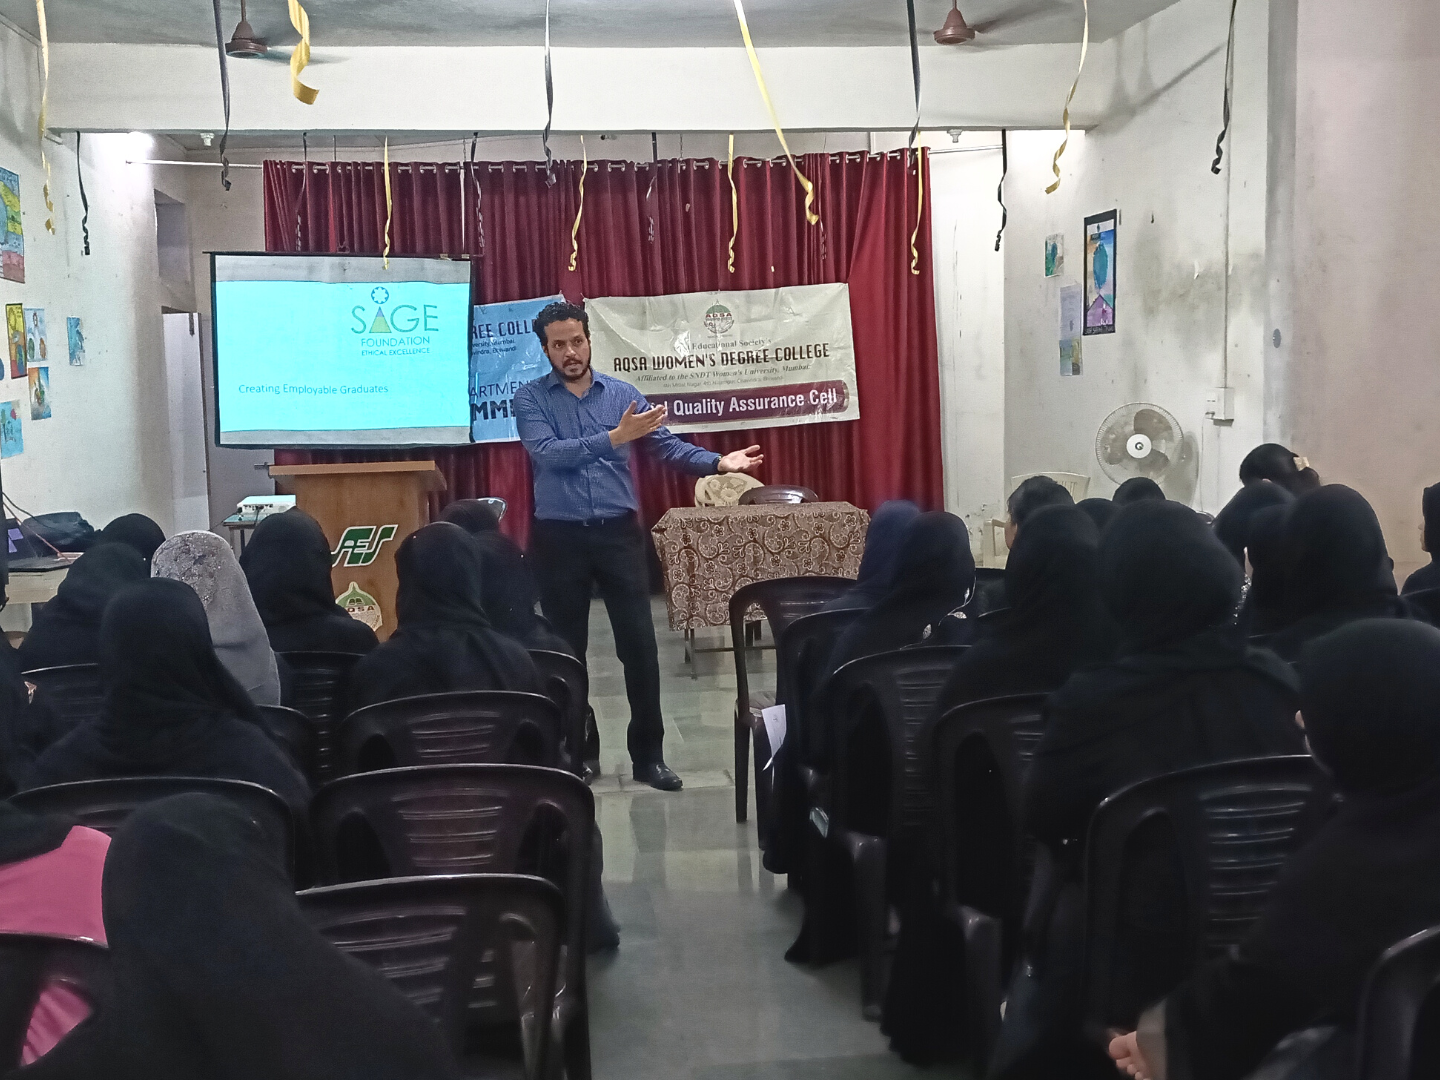 BFSI Seminar at Aqsa Women’s Degree college